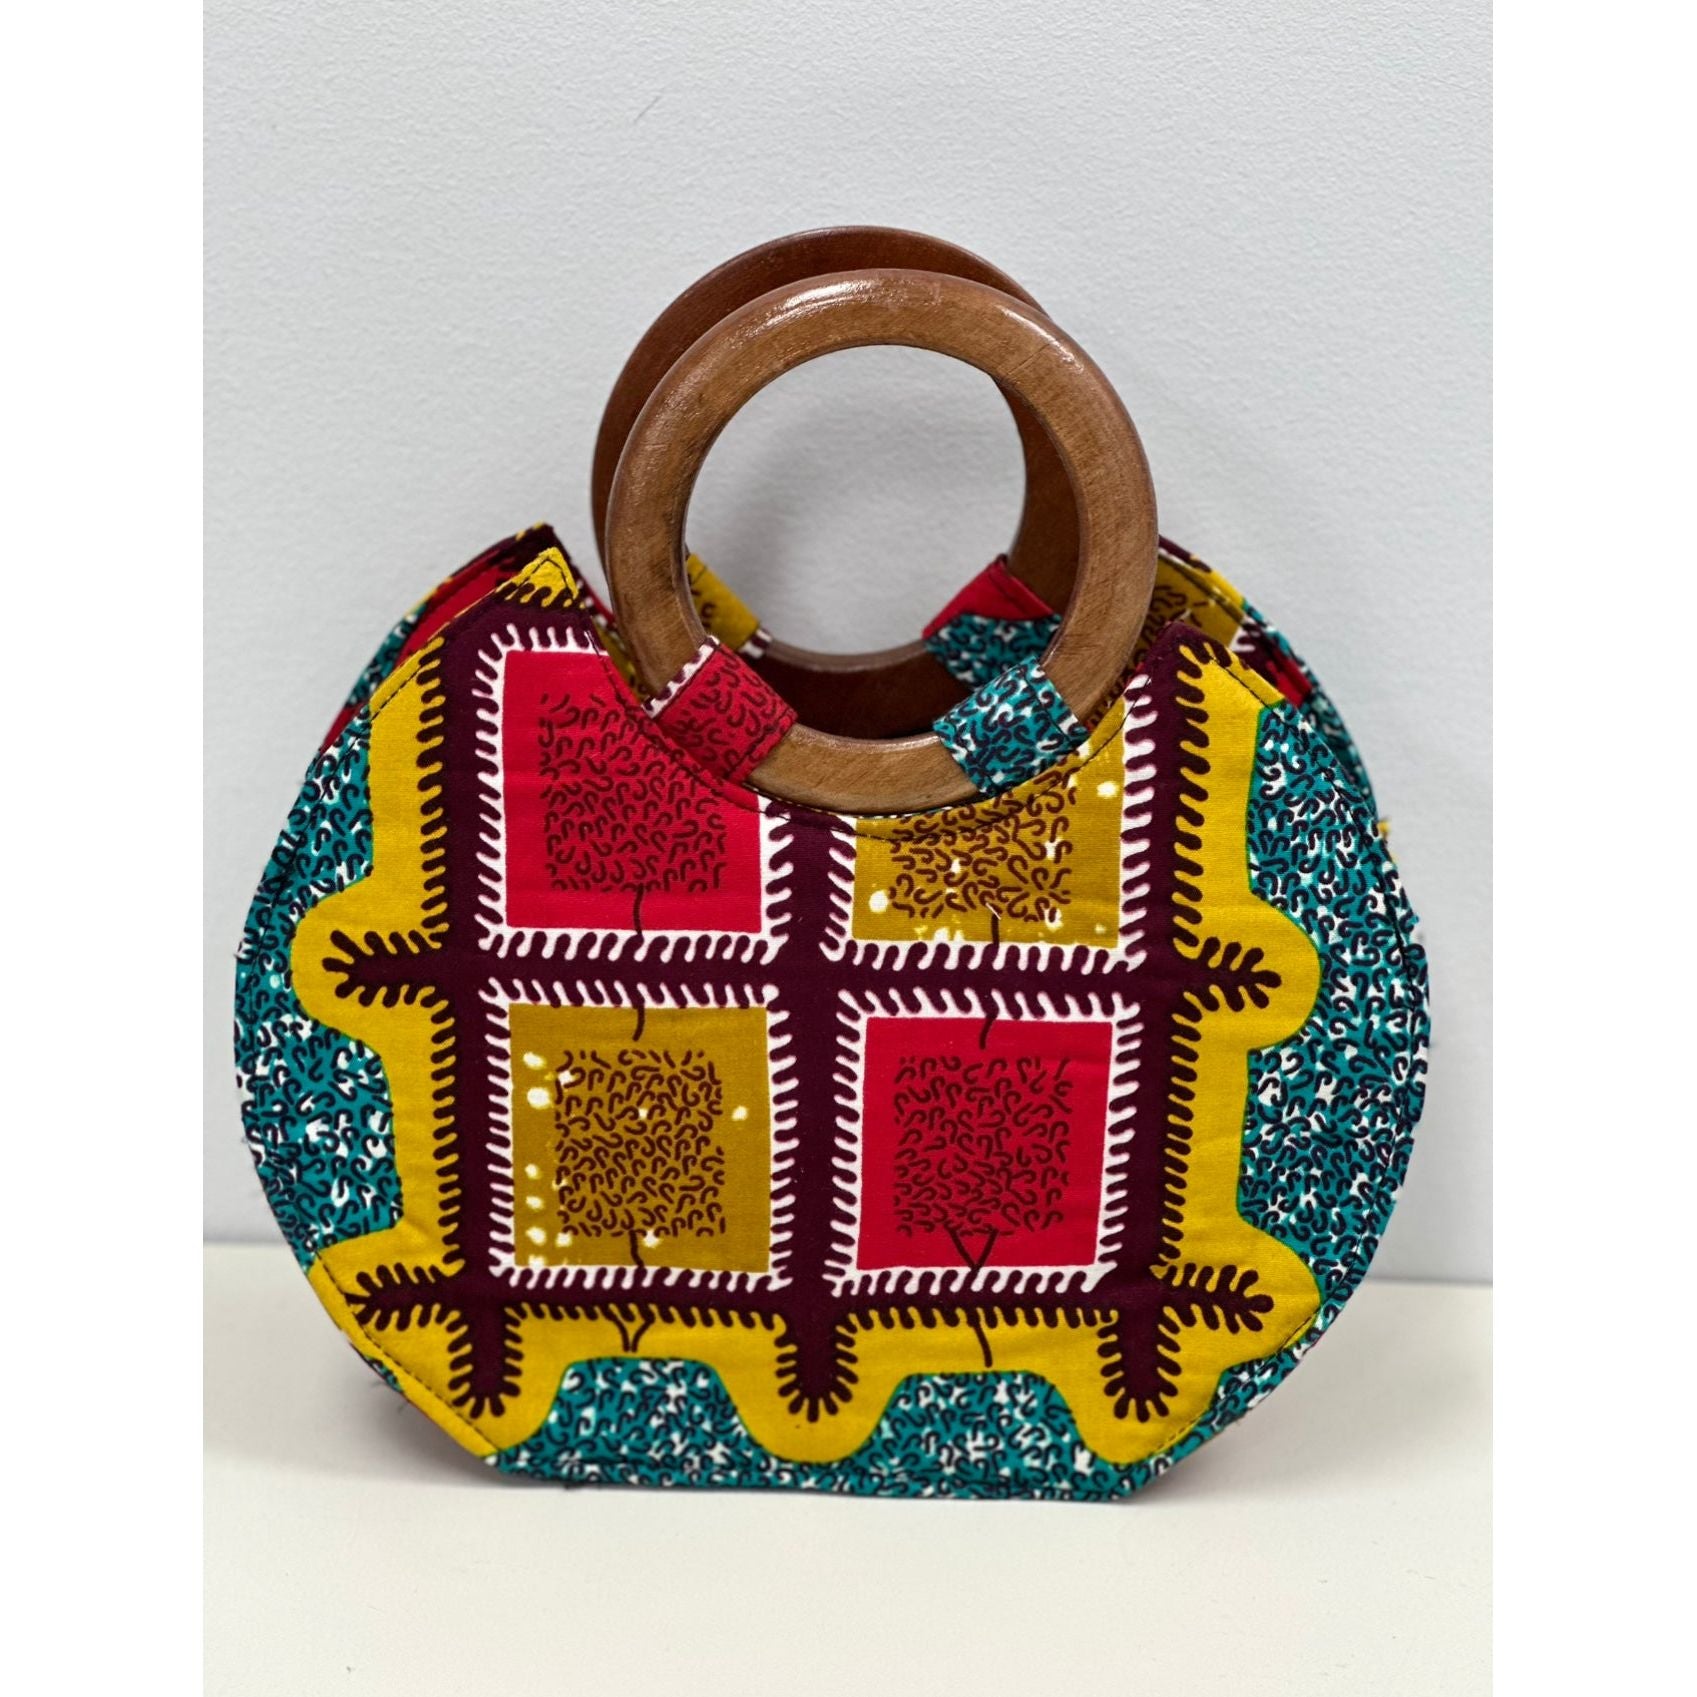 Relic Wooden handle purse with shoulder strap Boho Look! | eBay